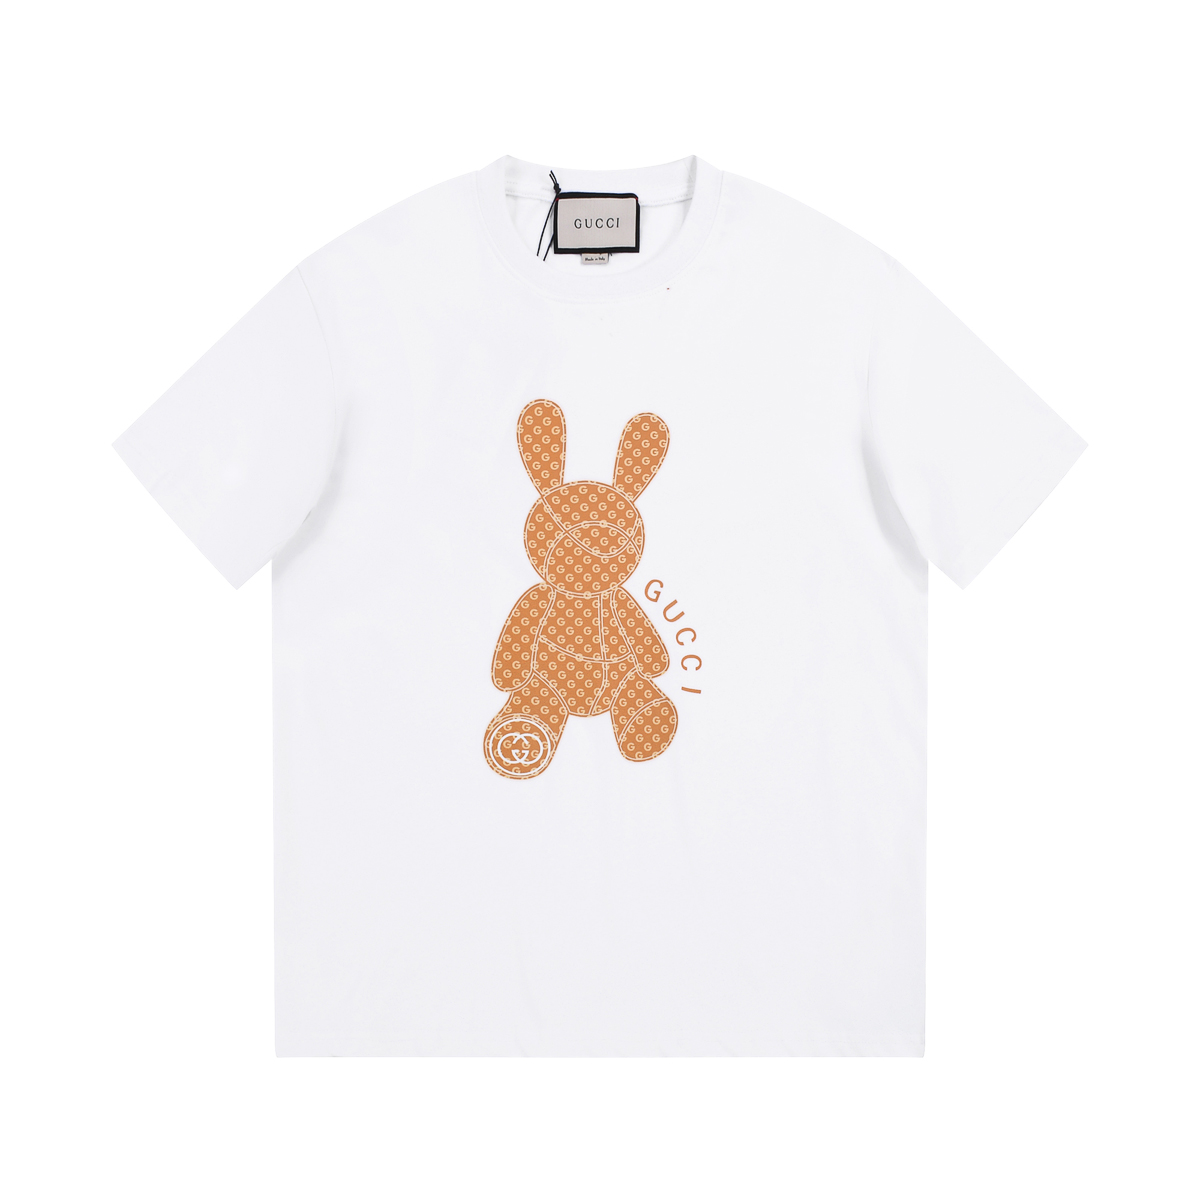 Gucci Cute Rabbit T-shirt Black and White